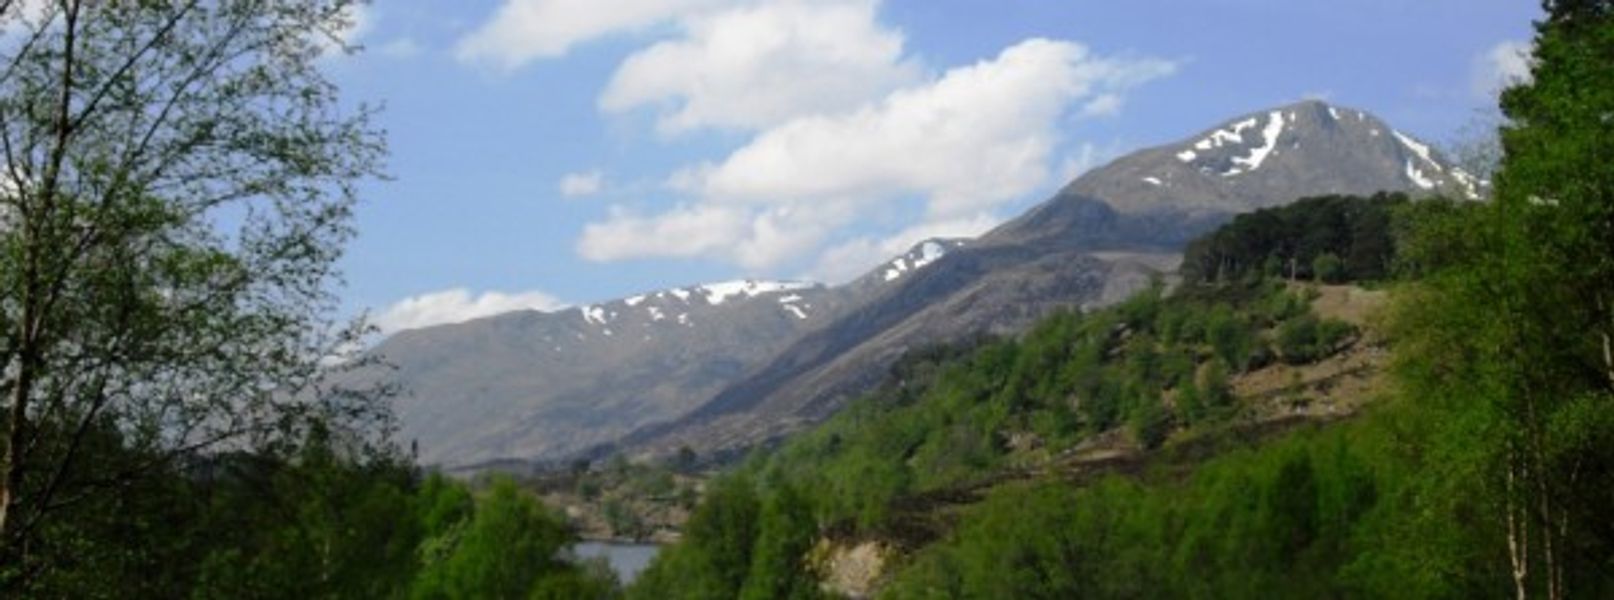 Glen Affric, Wild Rose Escapes, craft retreats, Highland's, Scotland